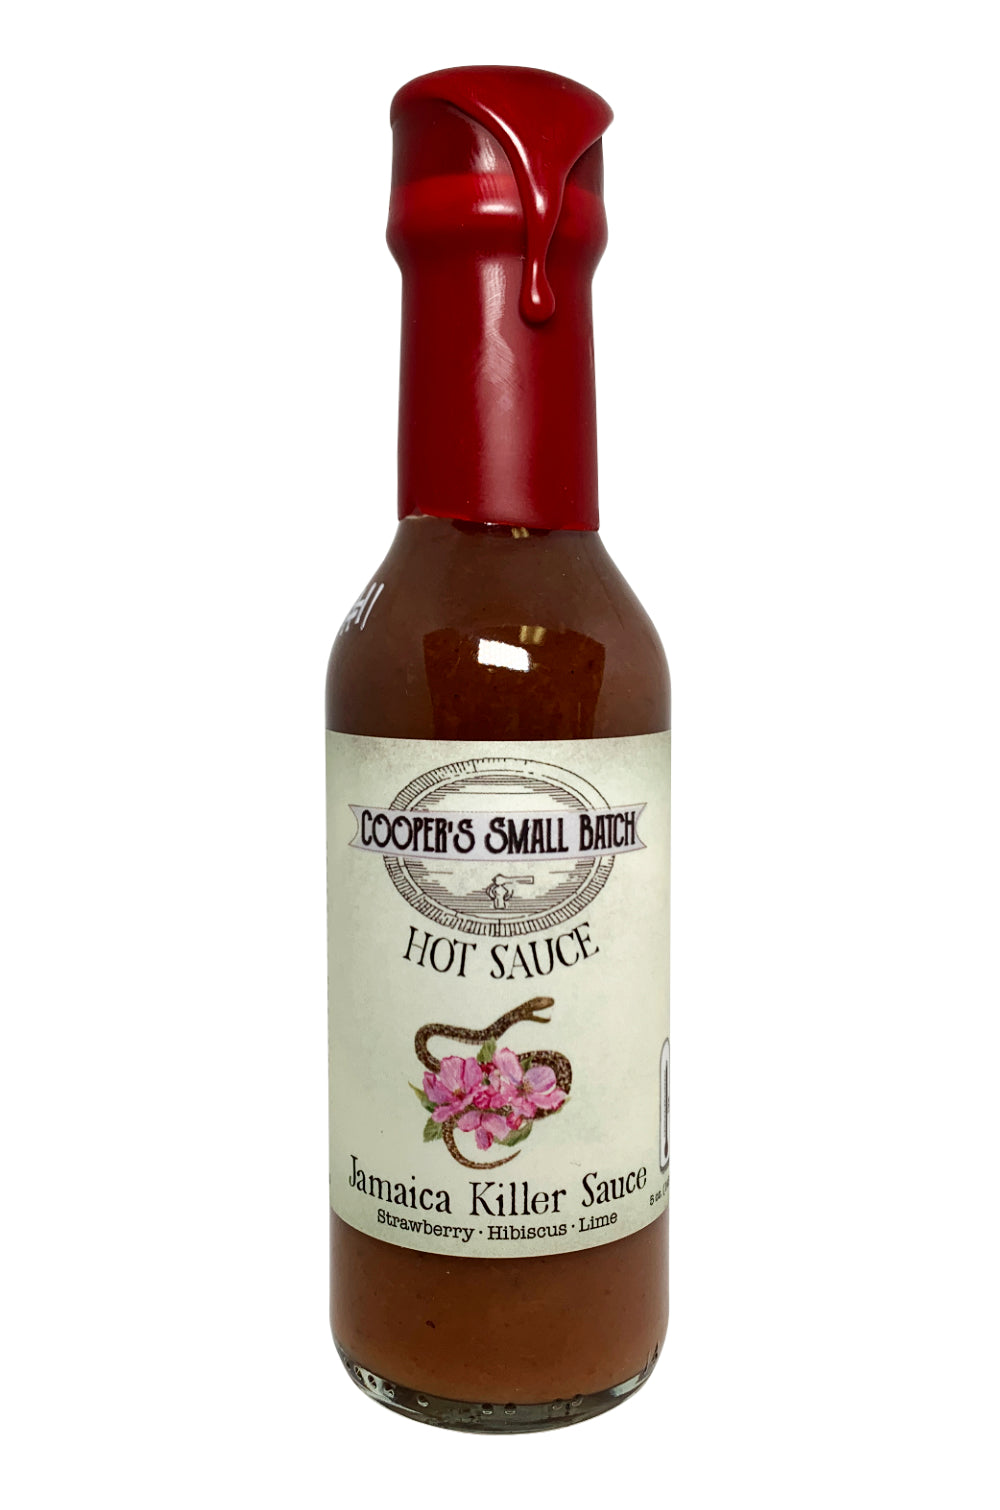 Cooper's Small Batch Jamaica Killer Sauce